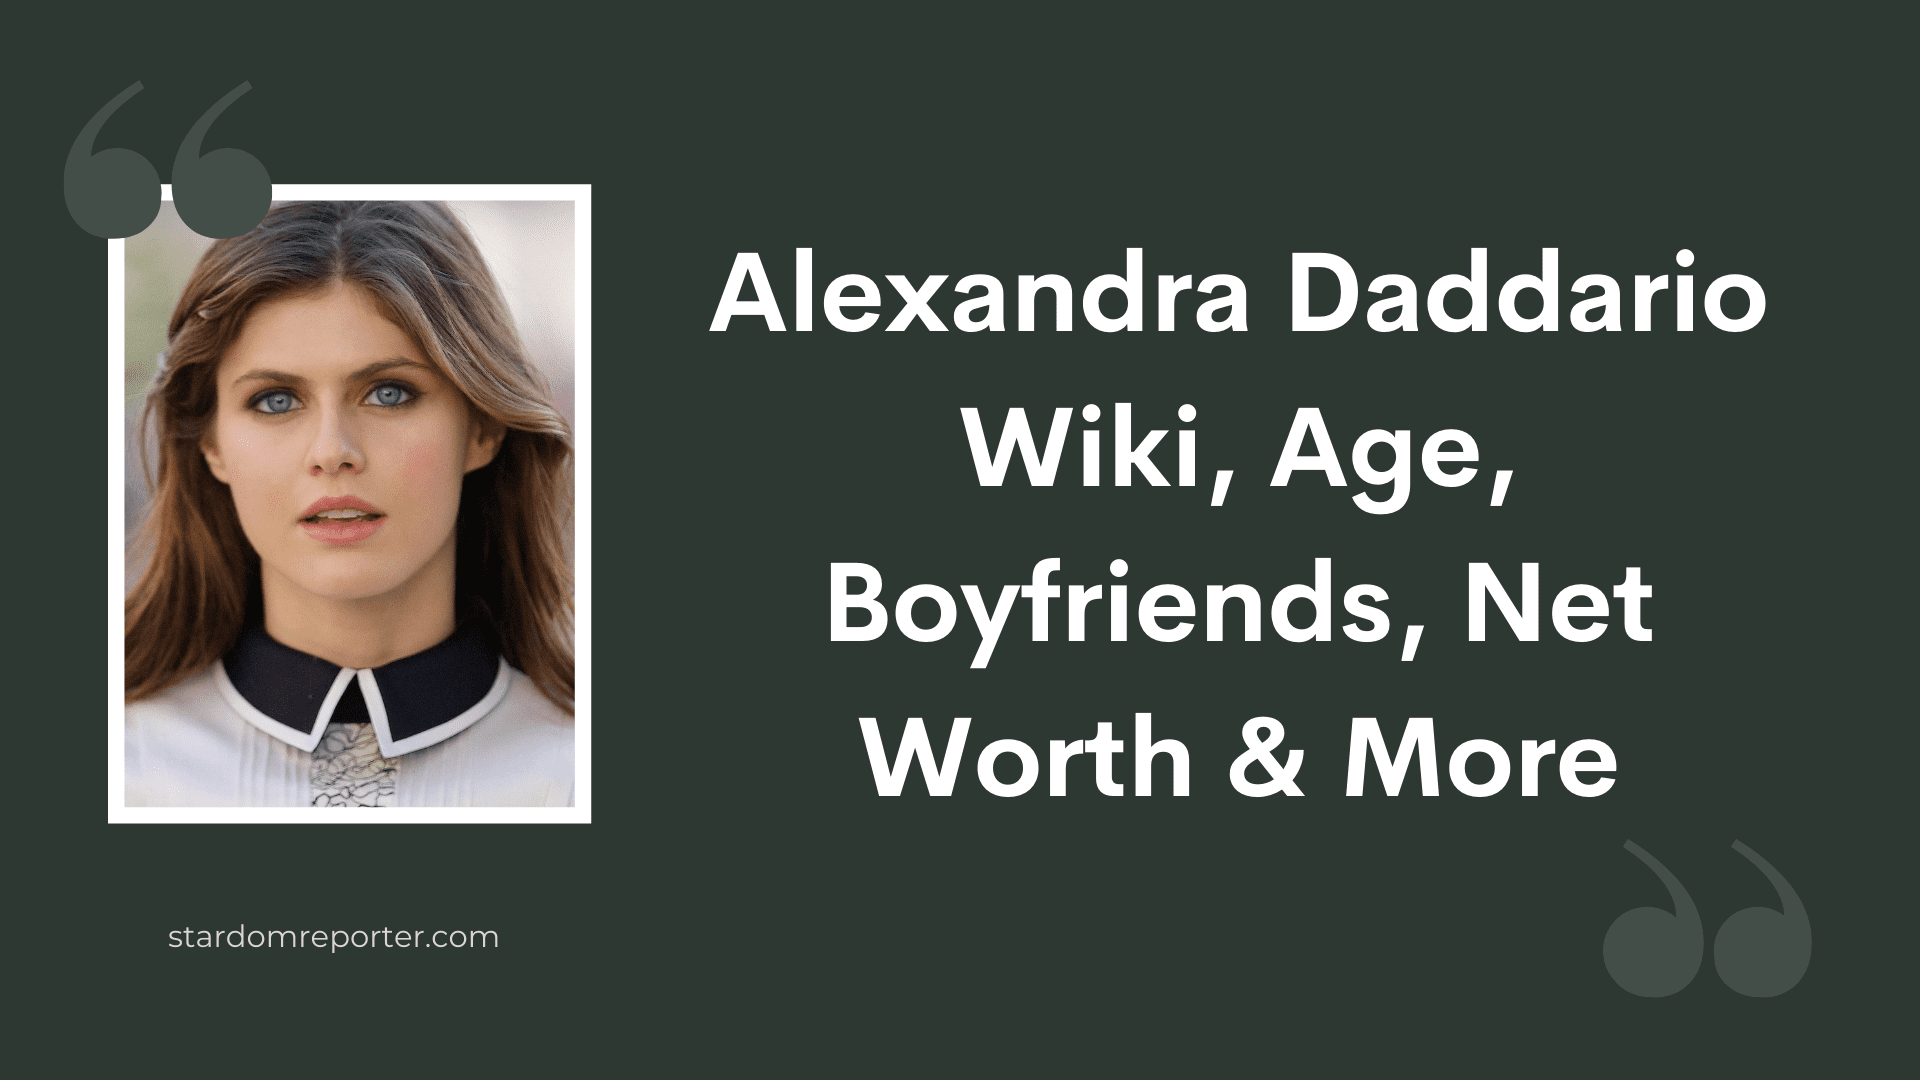 Alexandra Daddario Wiki, Age, Boyfriends, Net Worth & More - 11